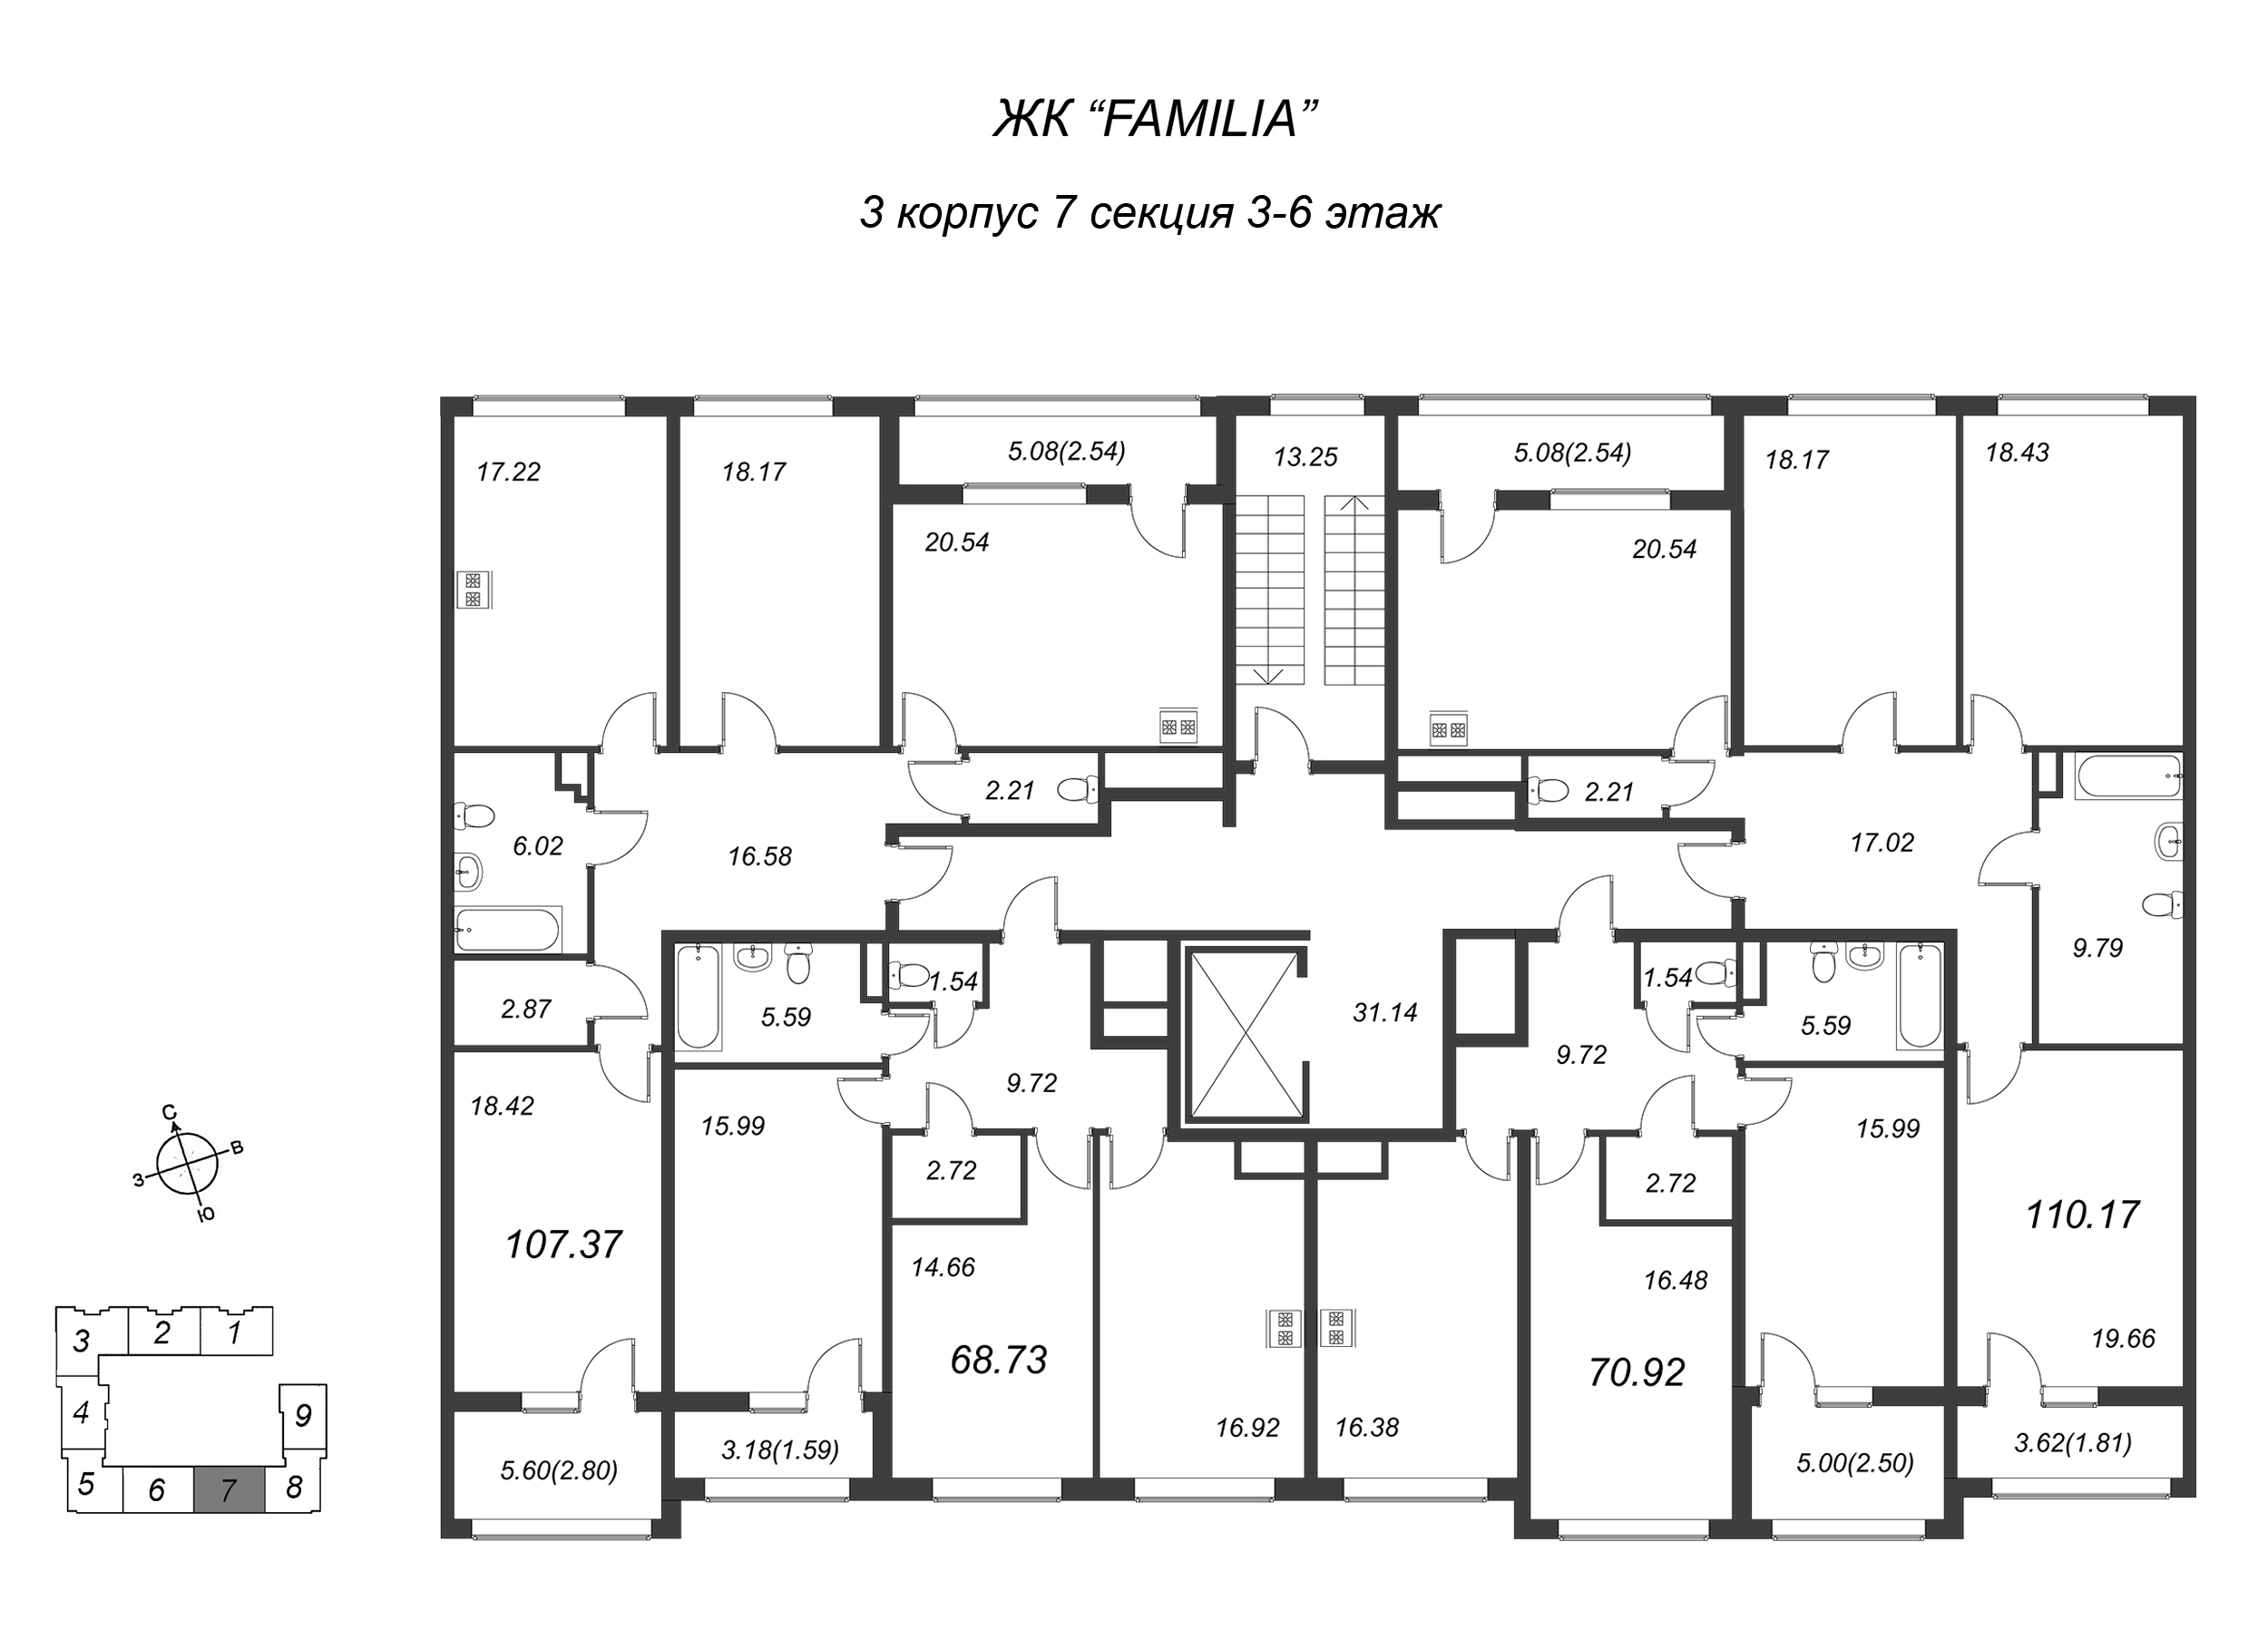 3-комнатная квартира, 110.4 м² в ЖК "FAMILIA" - планировка этажа